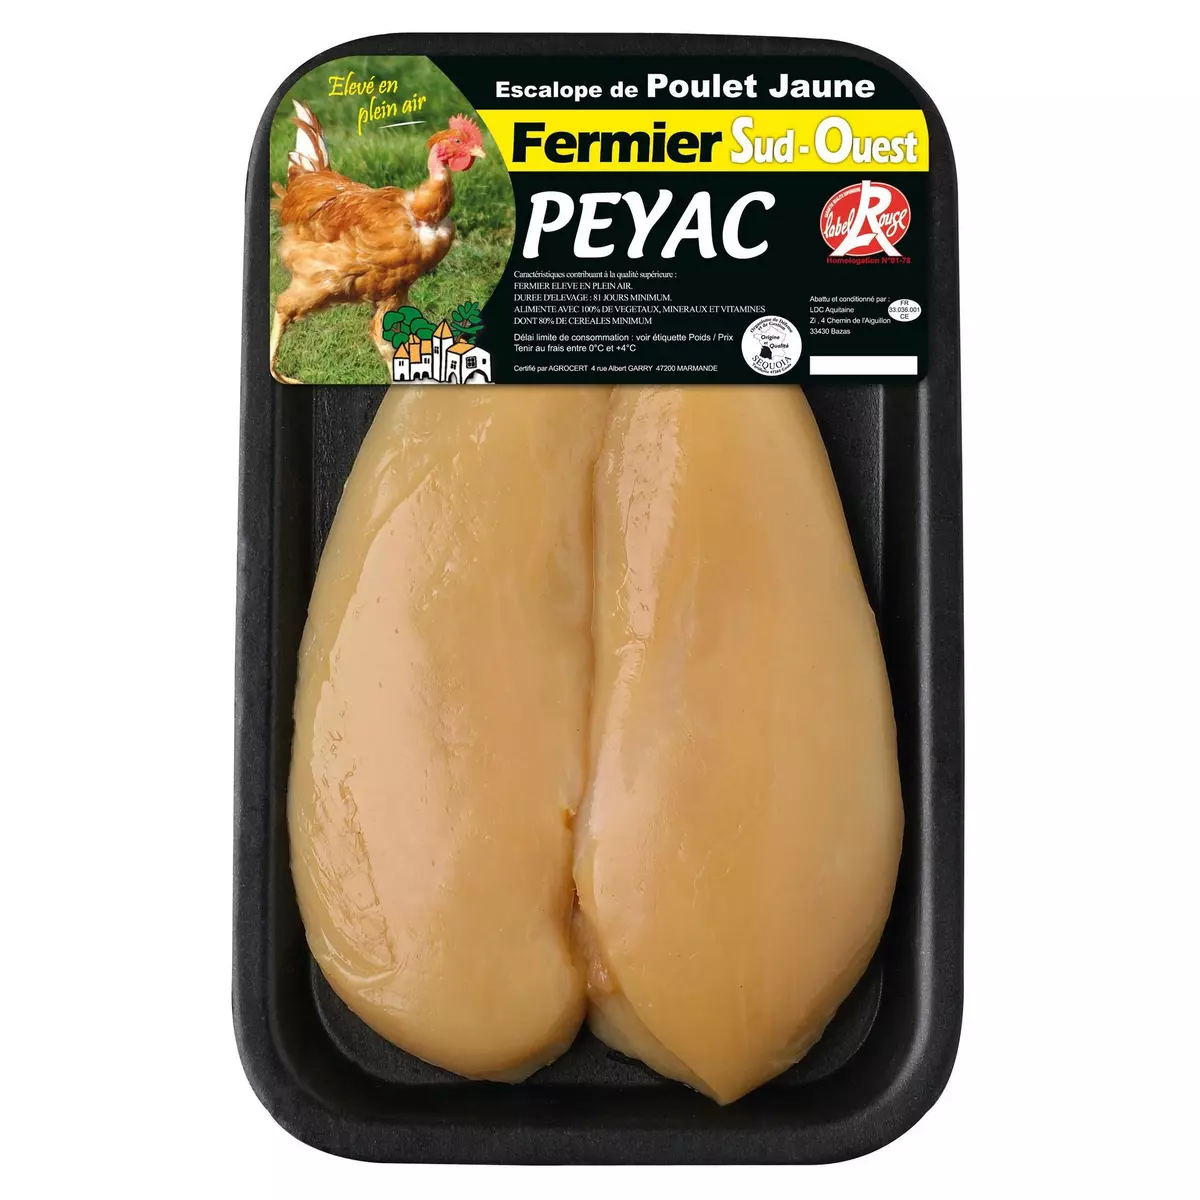 PEYAC Escalope de poulet jaune 260g